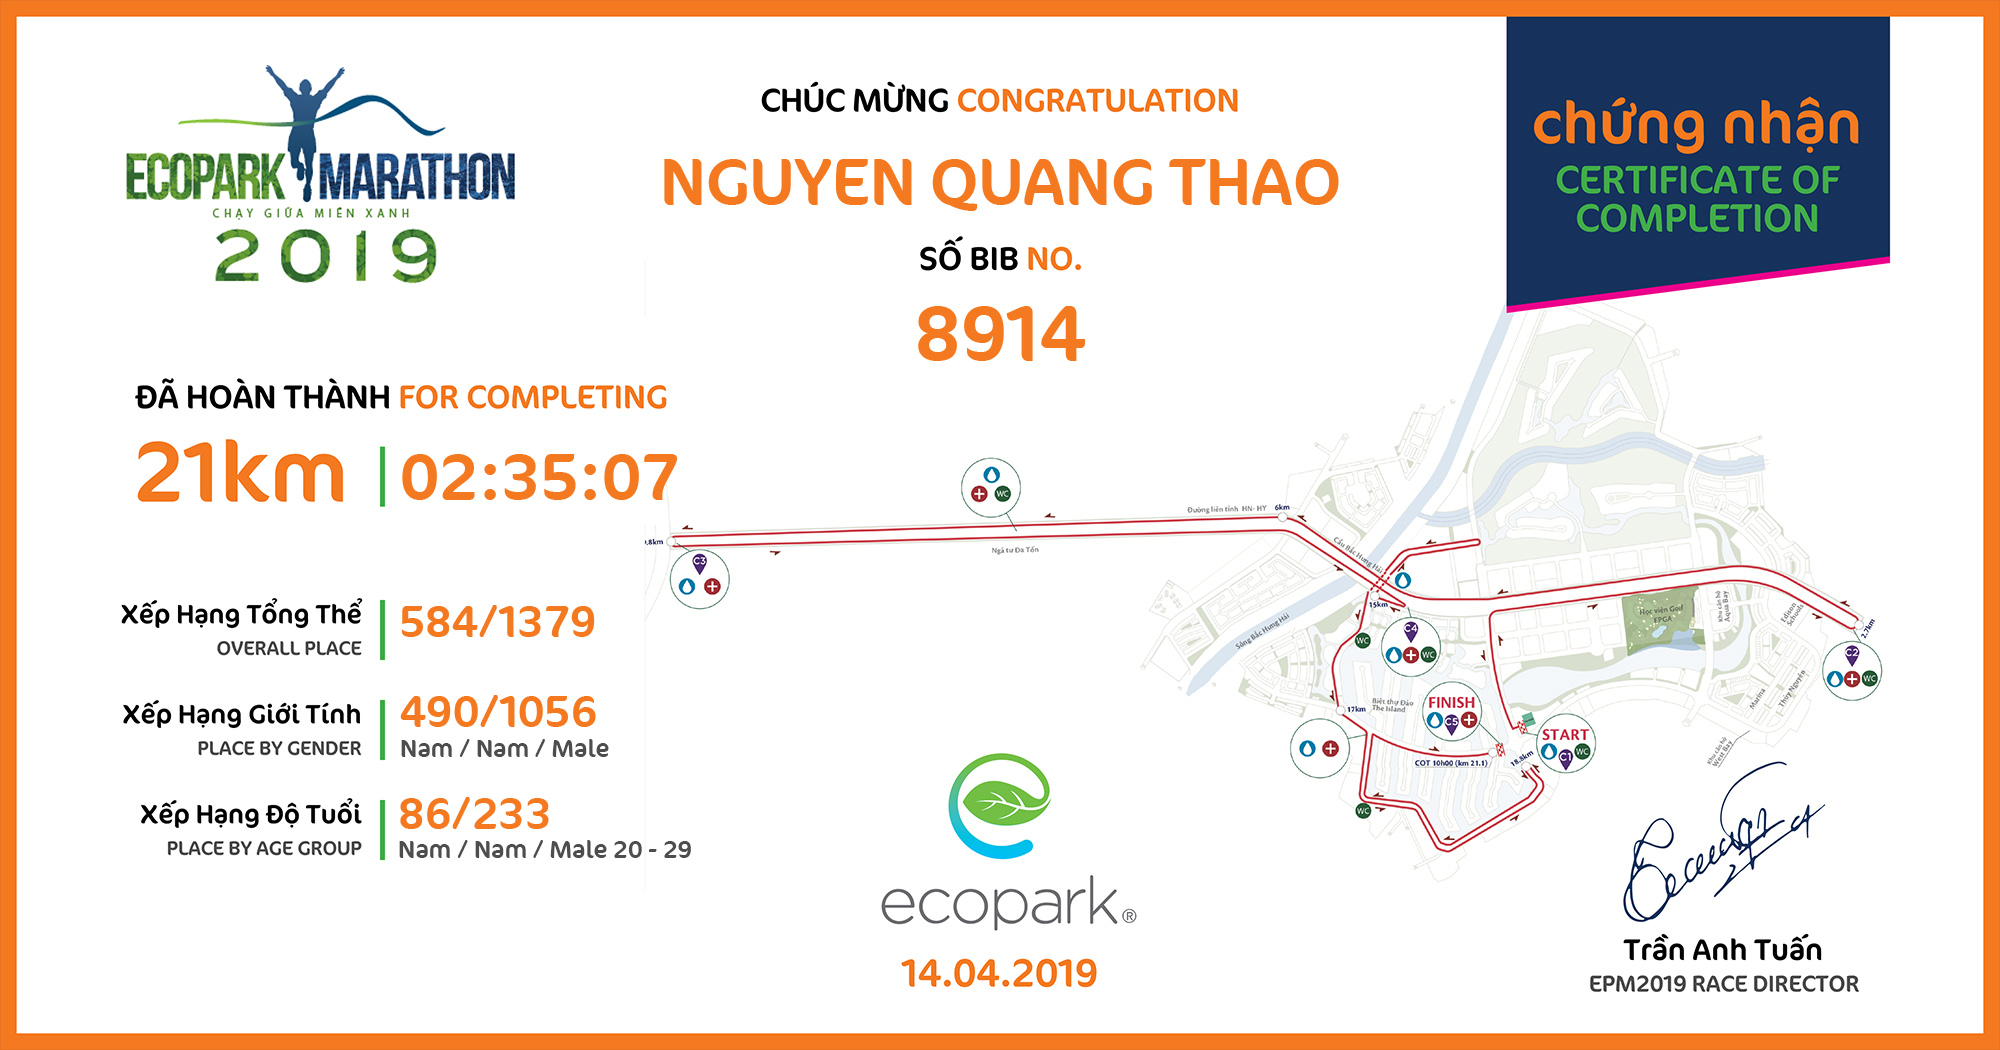 8914 - Nguyen Quang Thao